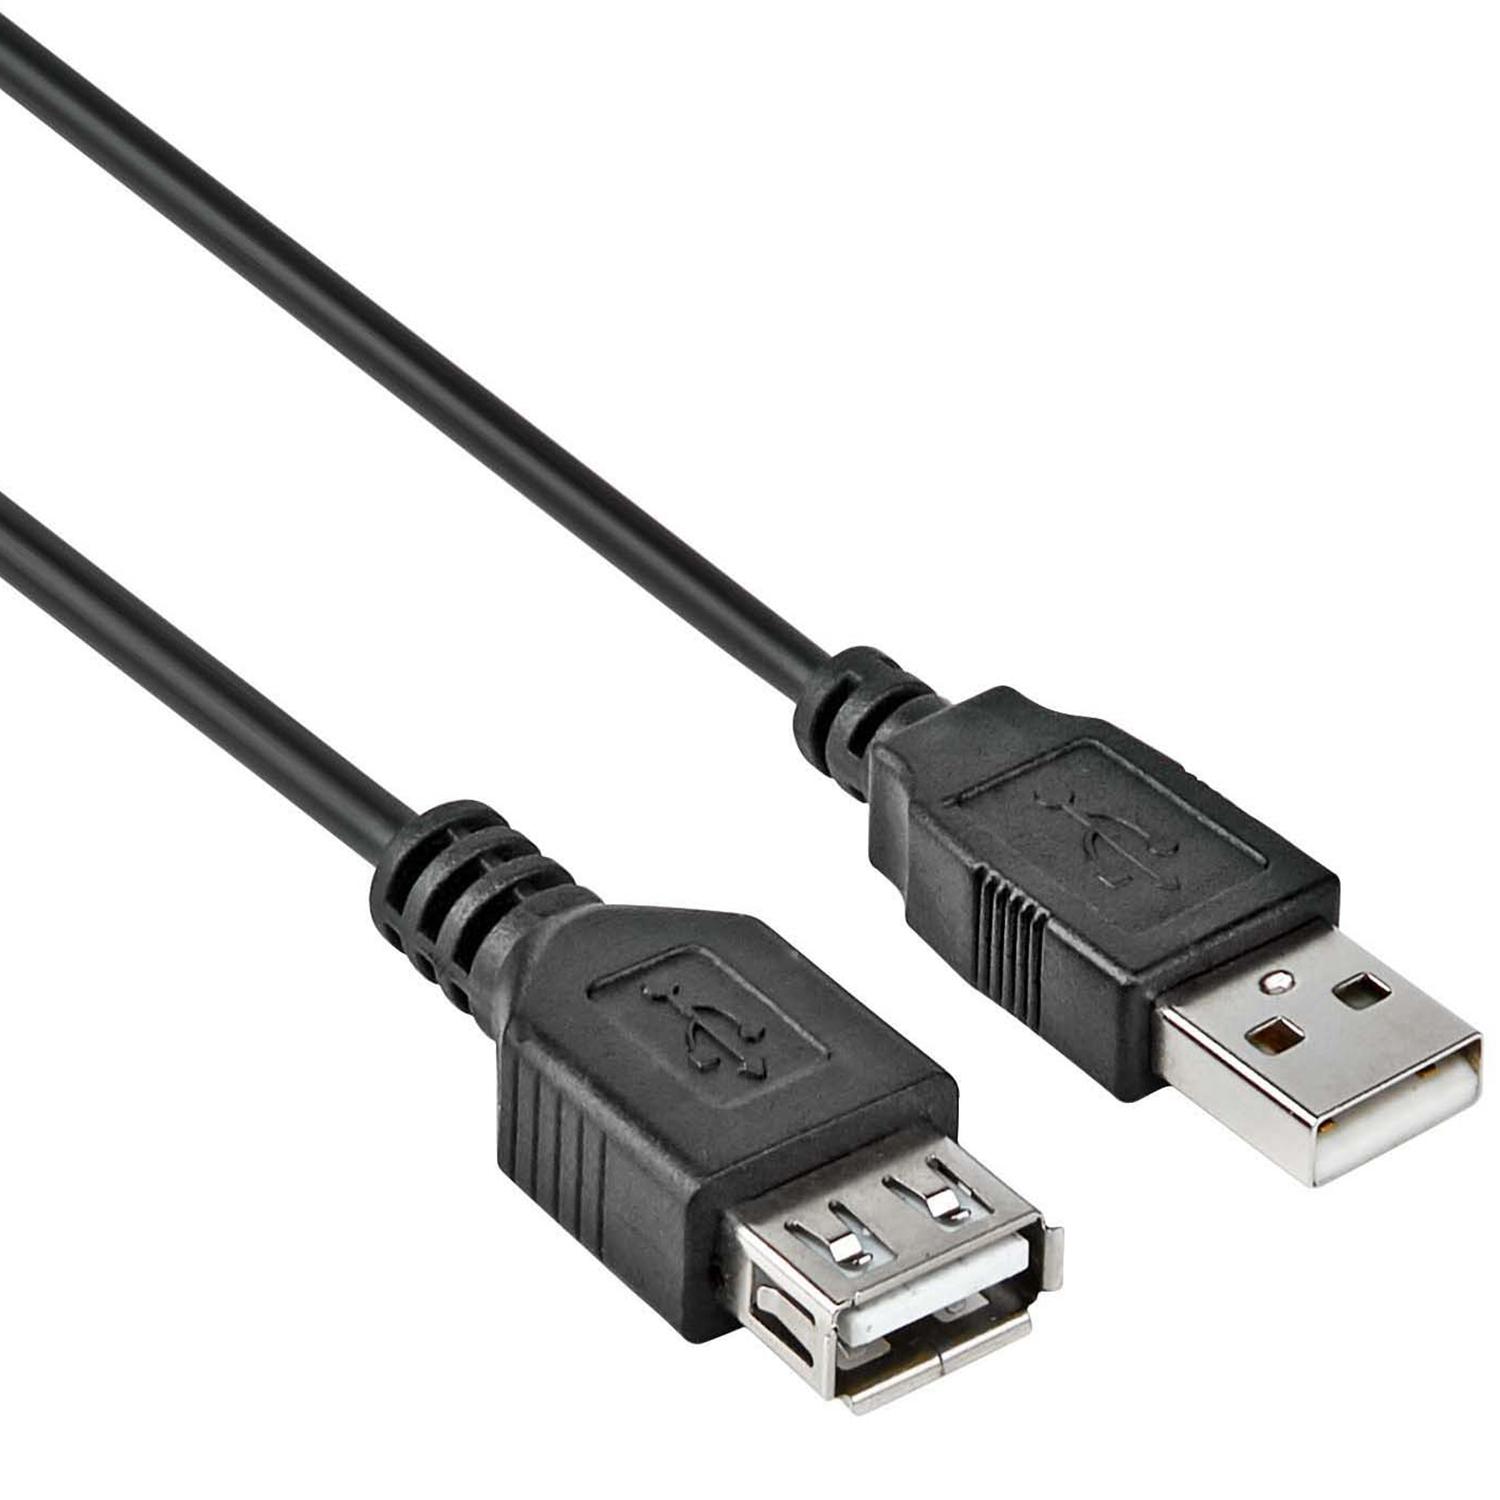 2.0 kabel - Merk: Allteq 1: USB A male Aansluiting 2: USB A female Kleur: Zwart